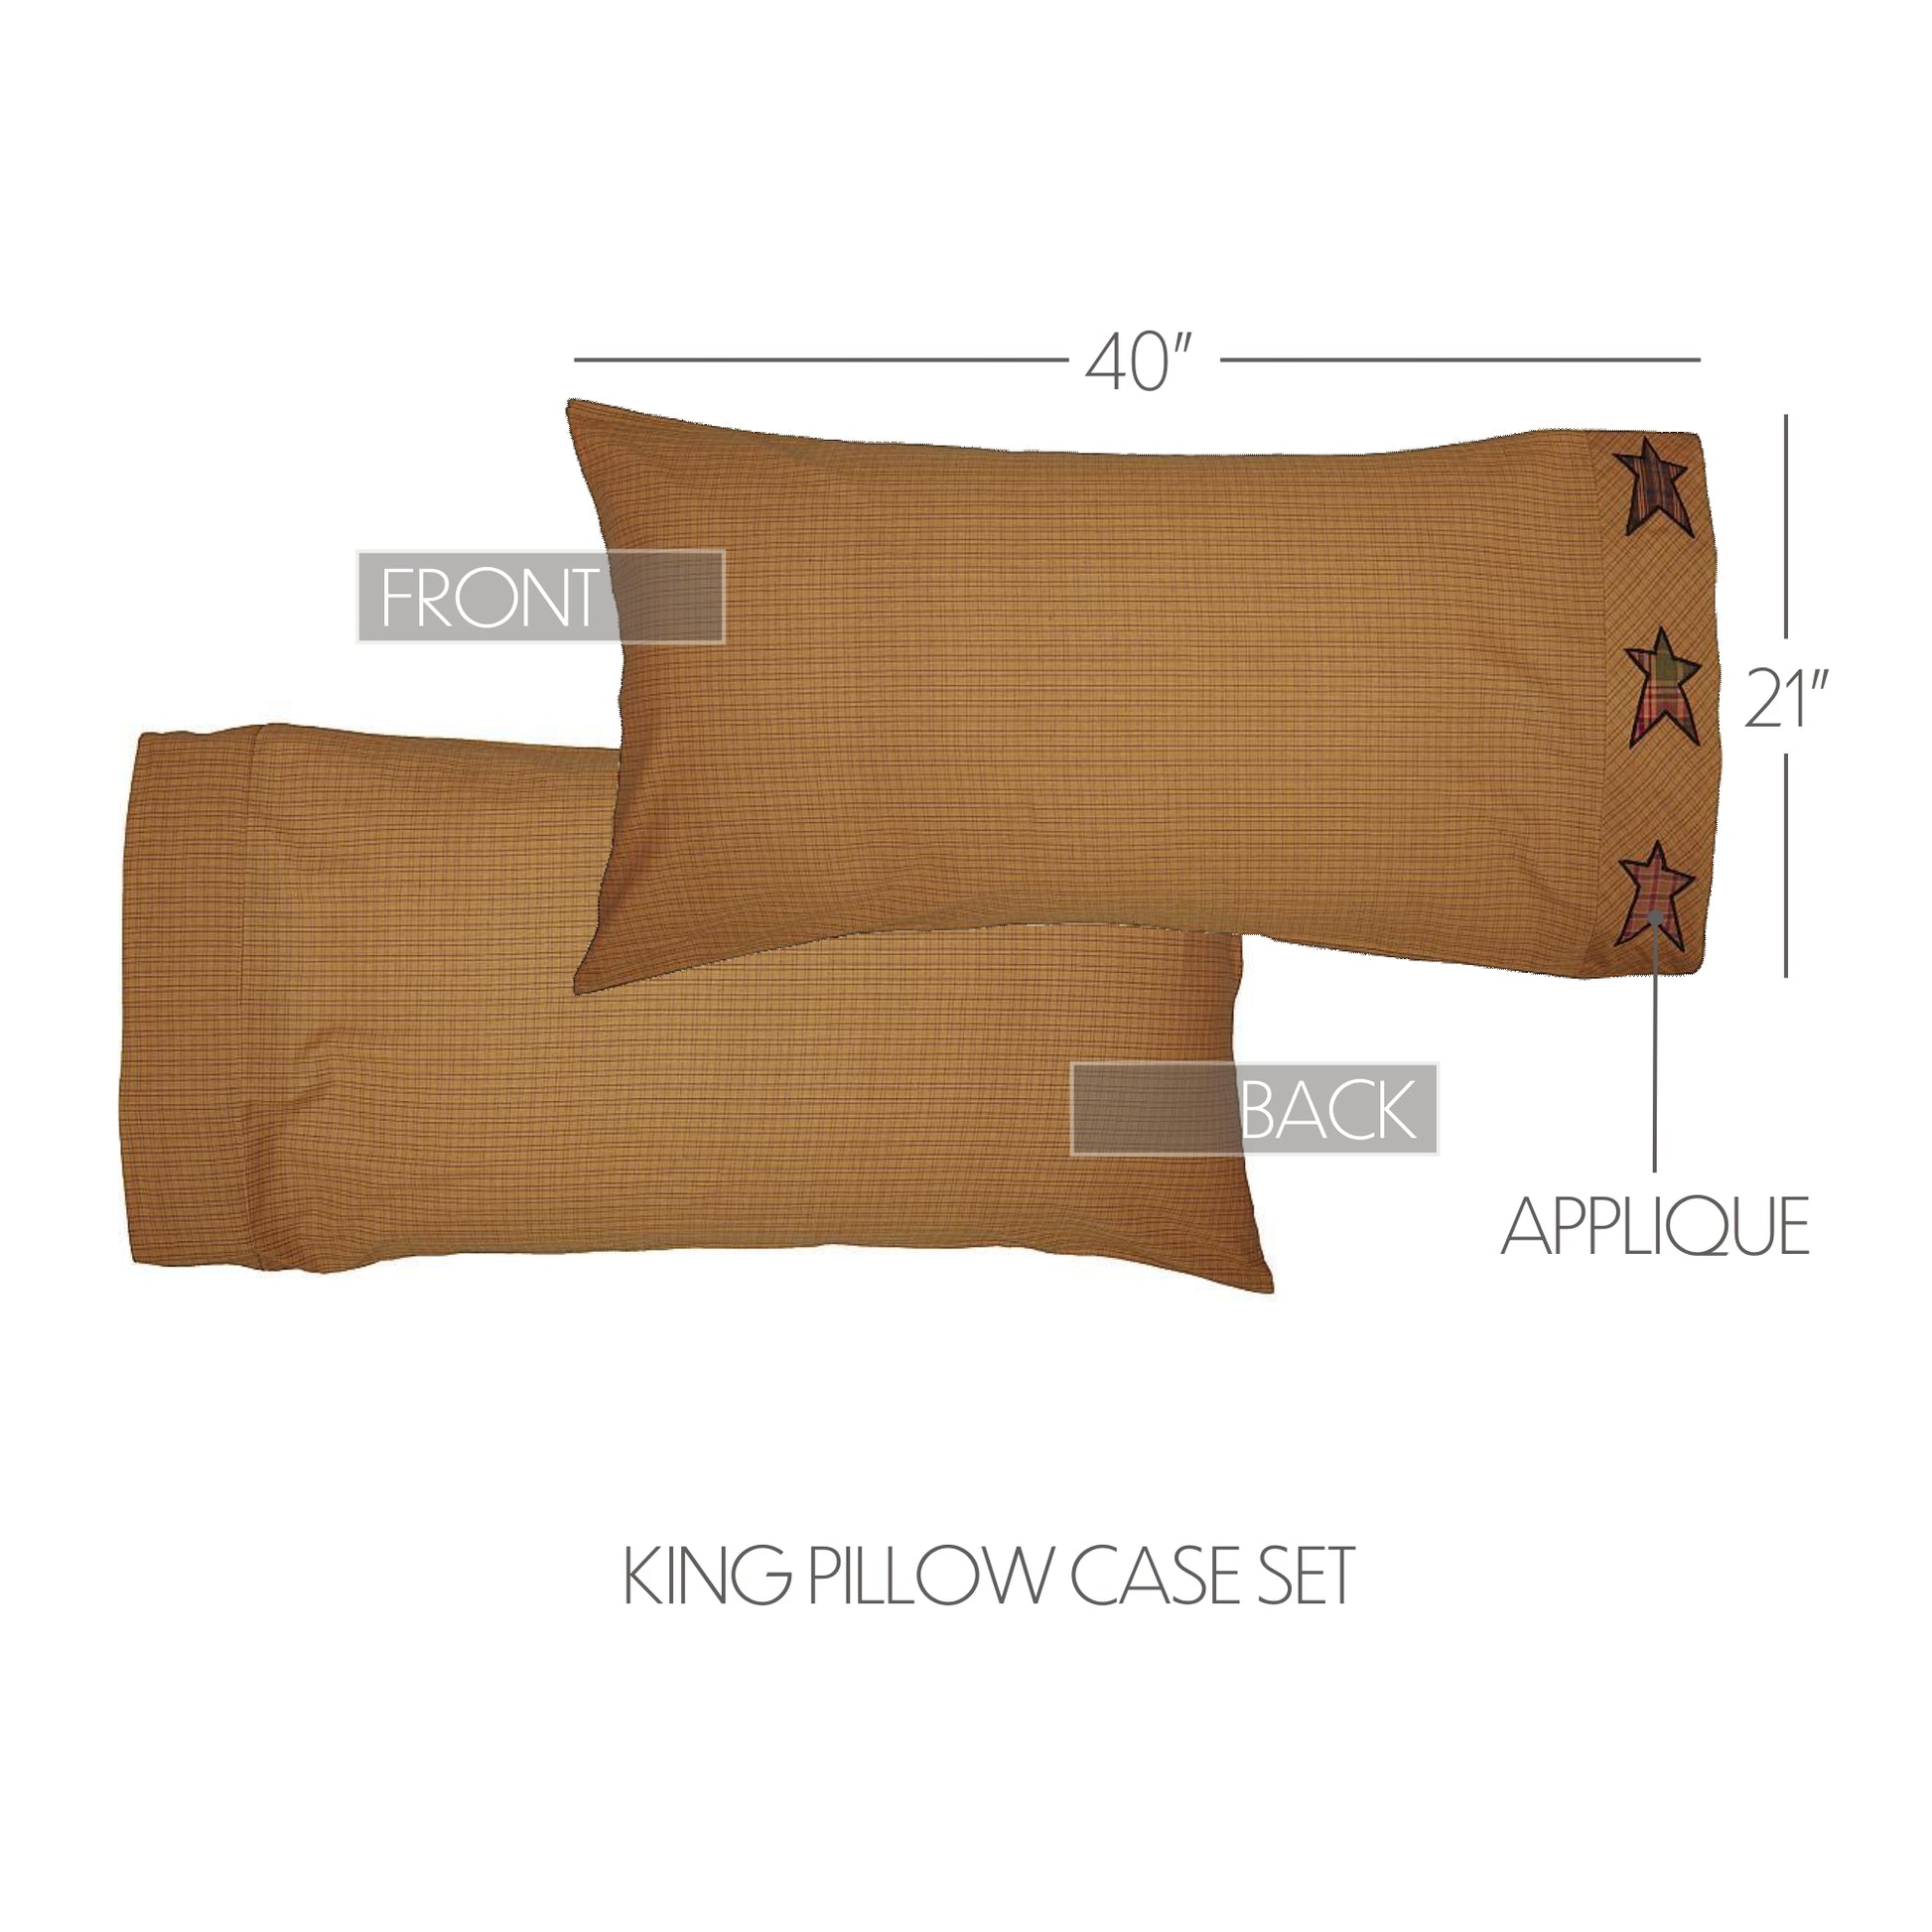 56782-Stratton-King-Pillow-Case-w-Applique-Star-Set-of-2-21x40-image-1